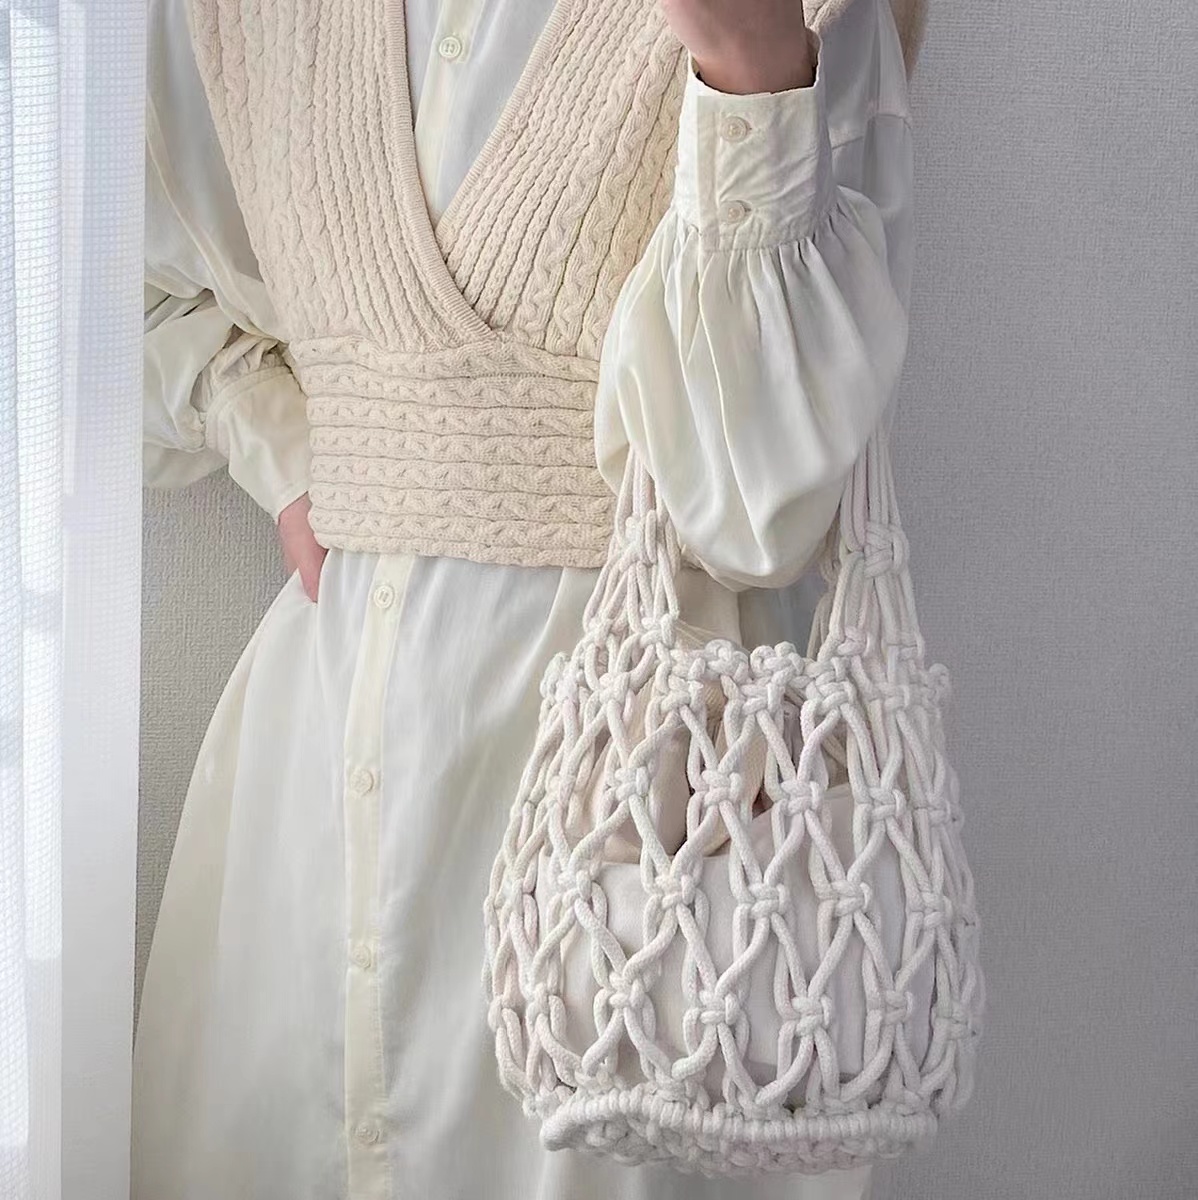 Cotton Thread Tote Handbags Solid Color Hollow Out Handmade Woven Crochet Arm Handbag Casual Braided Bags